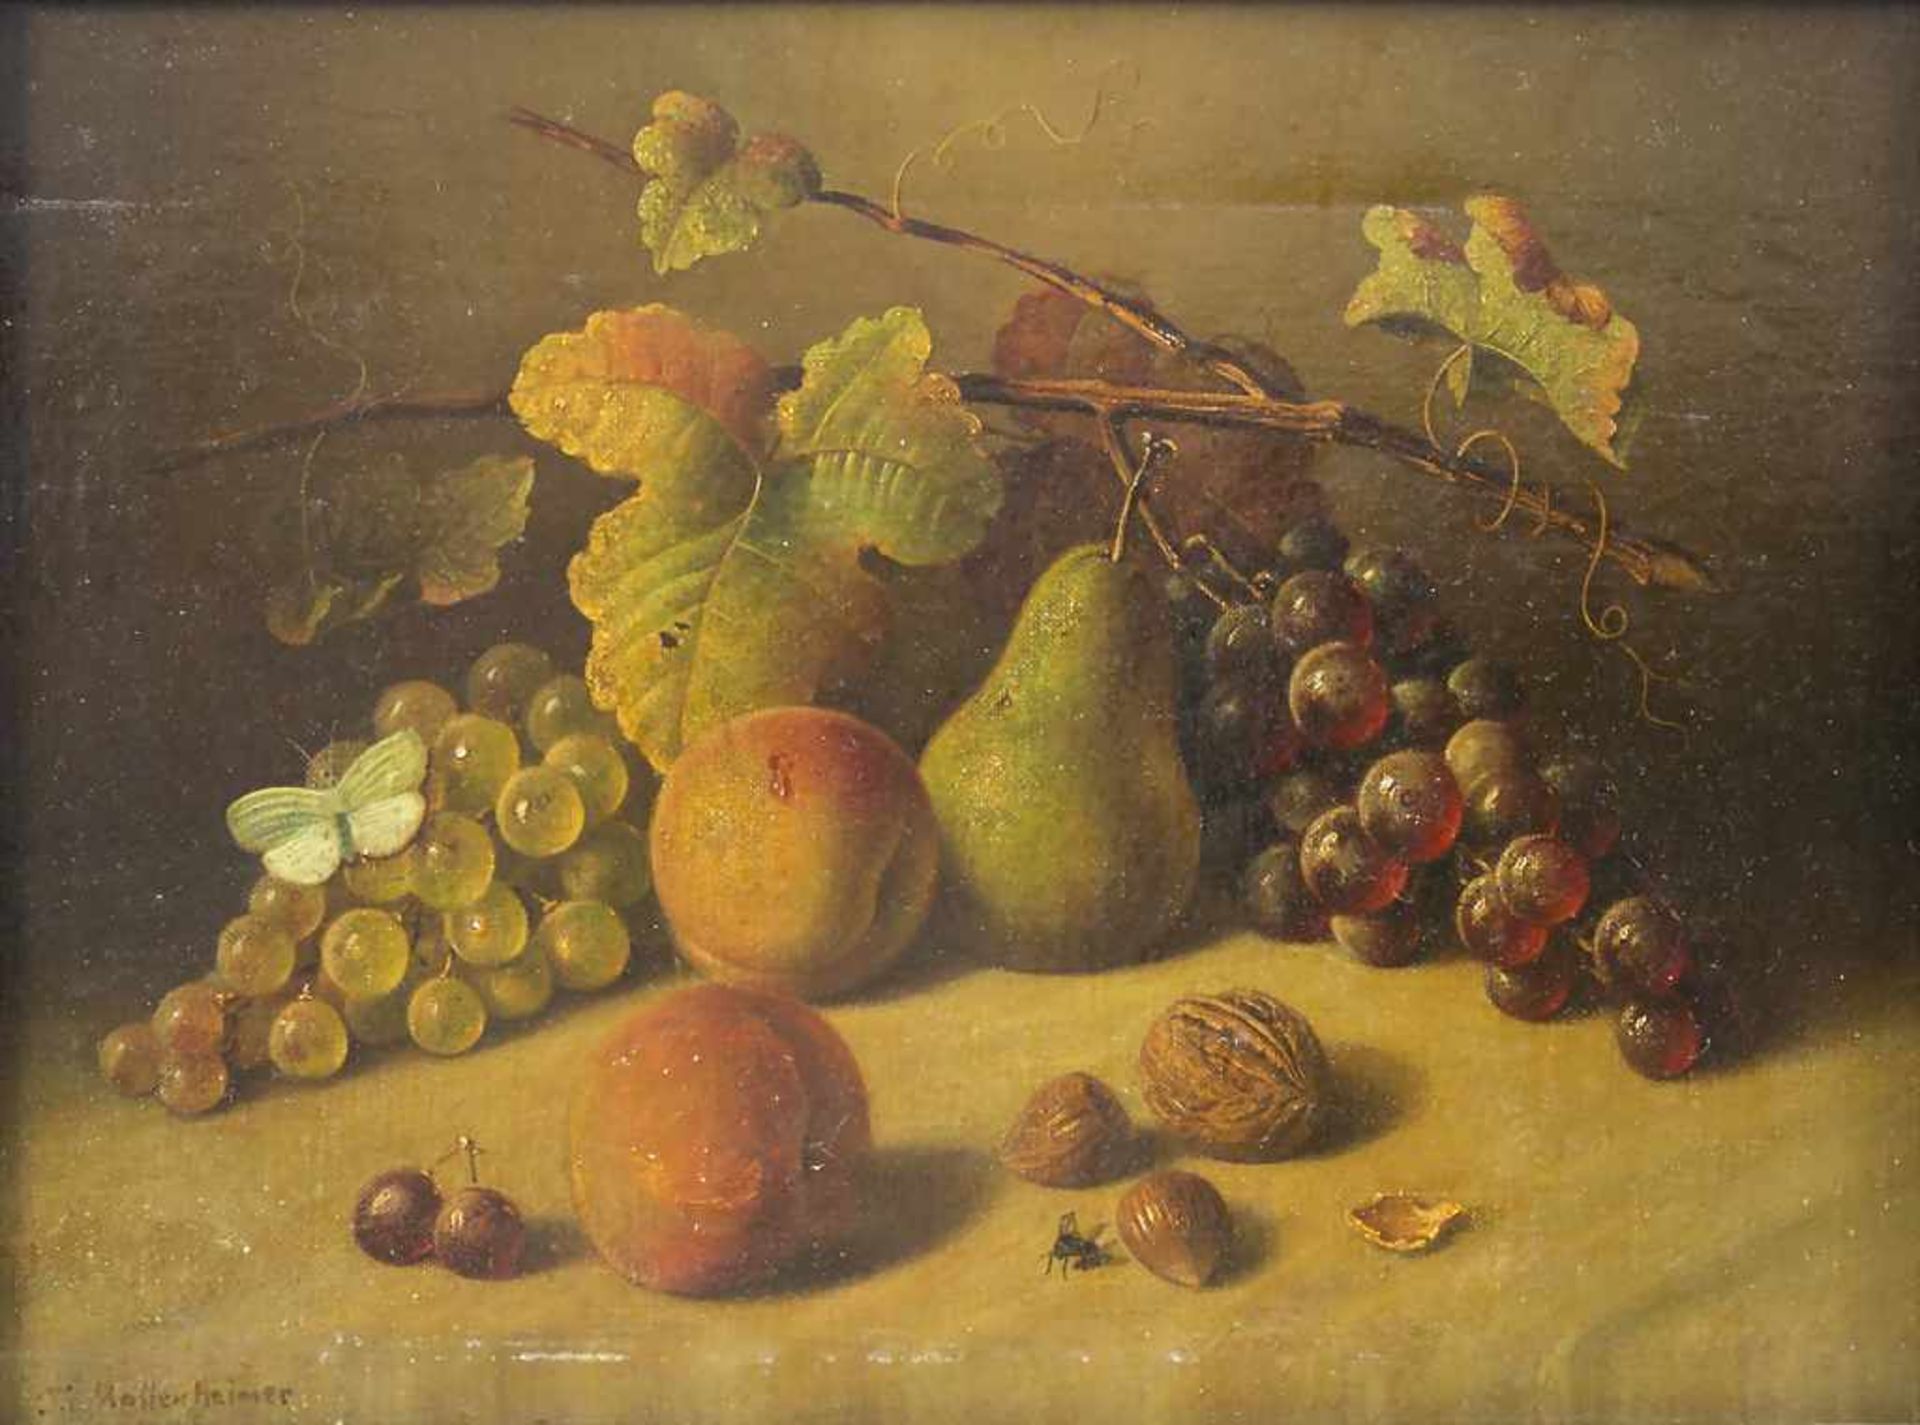 Theodor Mattenheimer (1787-1856), 'Früchtestillleben mit Insekten' / 'A fruit still life with